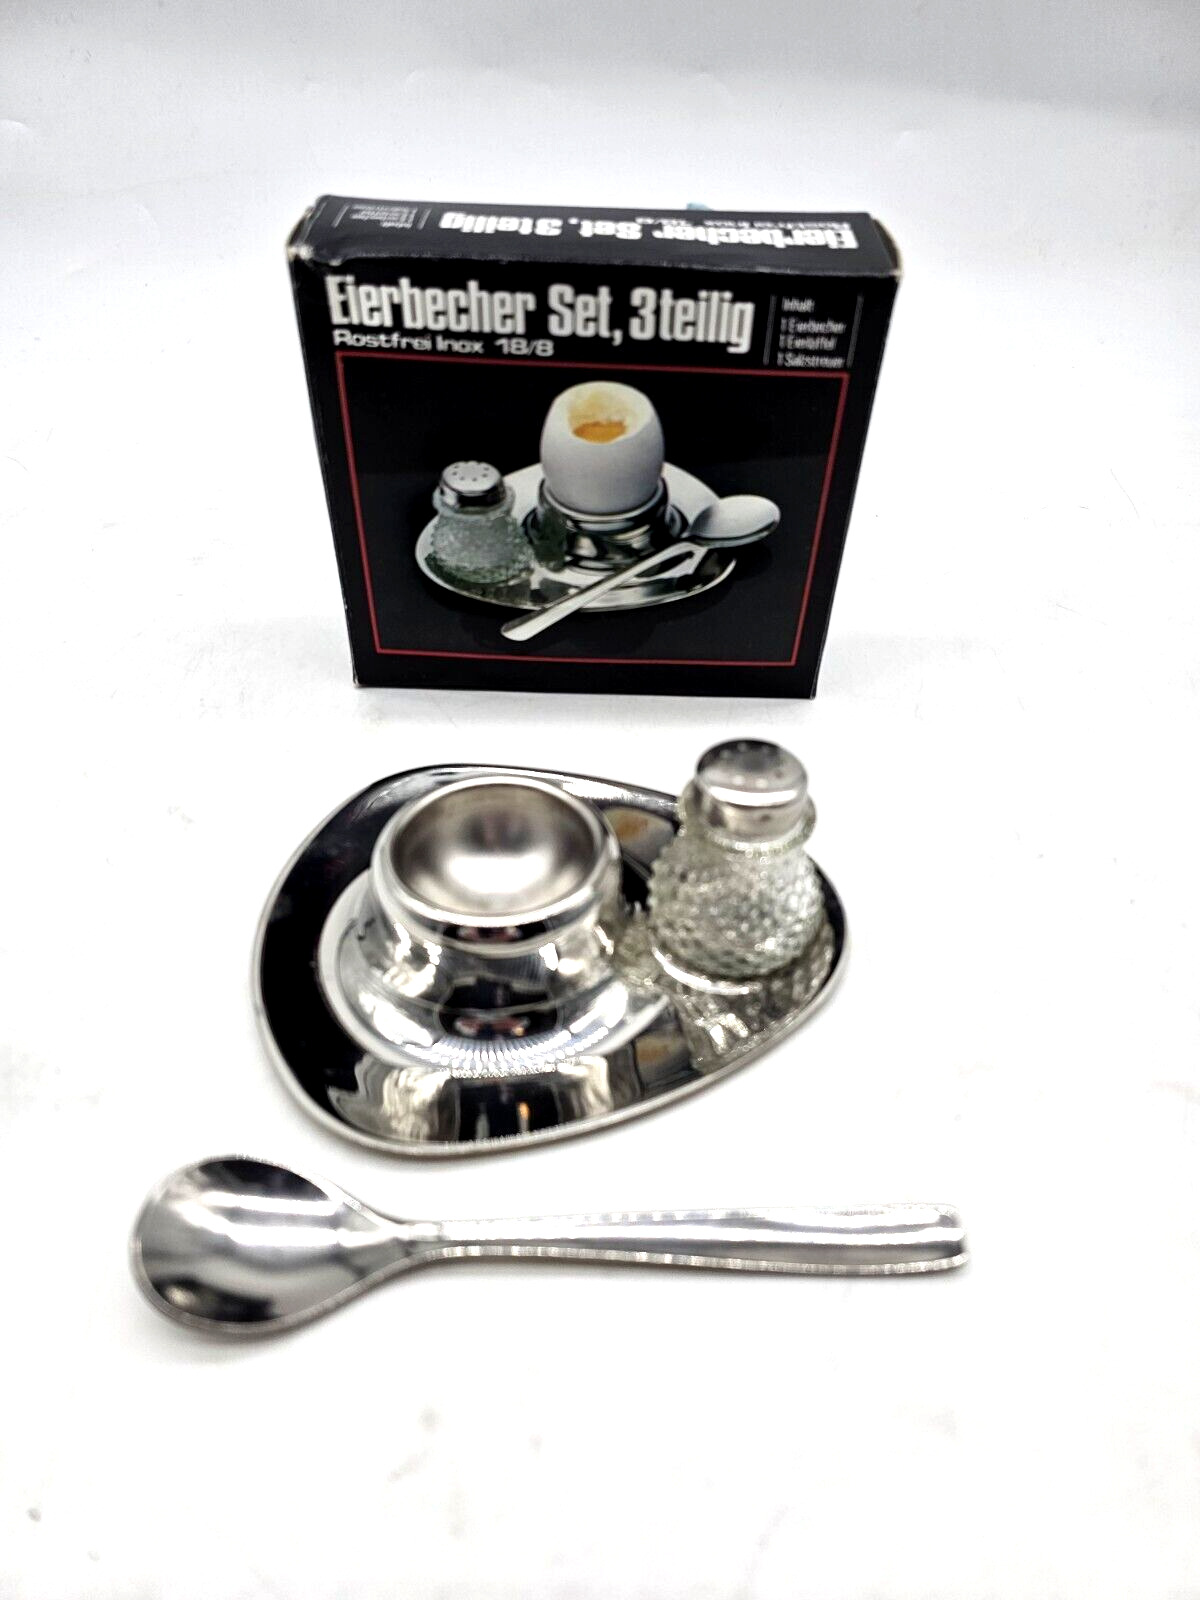 Eierbech Rostfros Inox Stainless Steel Egg Cup Holder Set Salt Shaker/Spoon